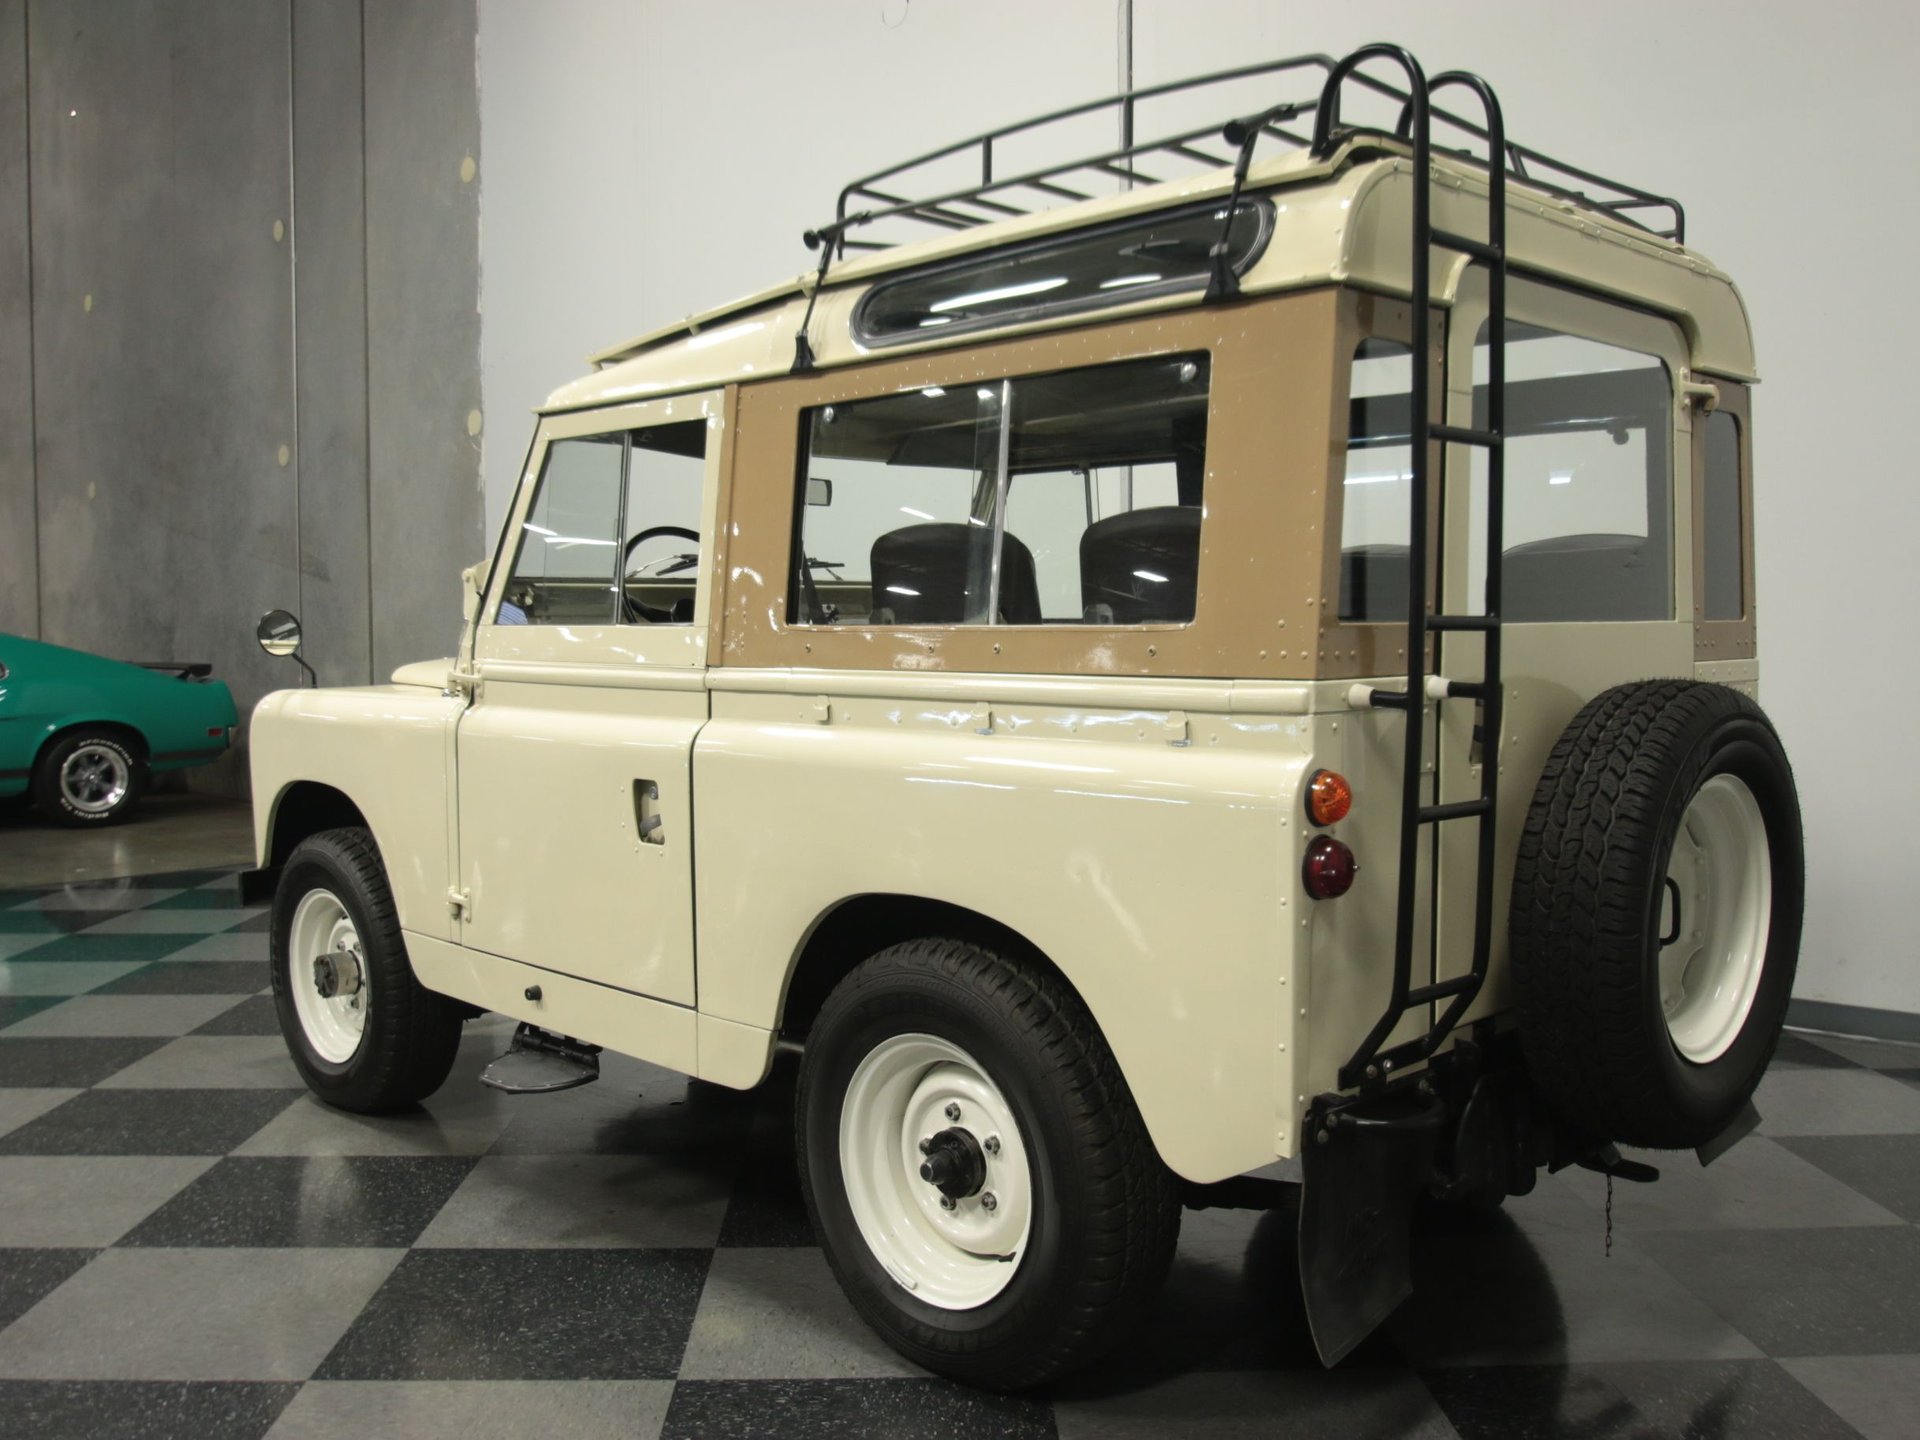 1968 Land Rover Series IIA | Classic Cars for Sale - Streetside Classics